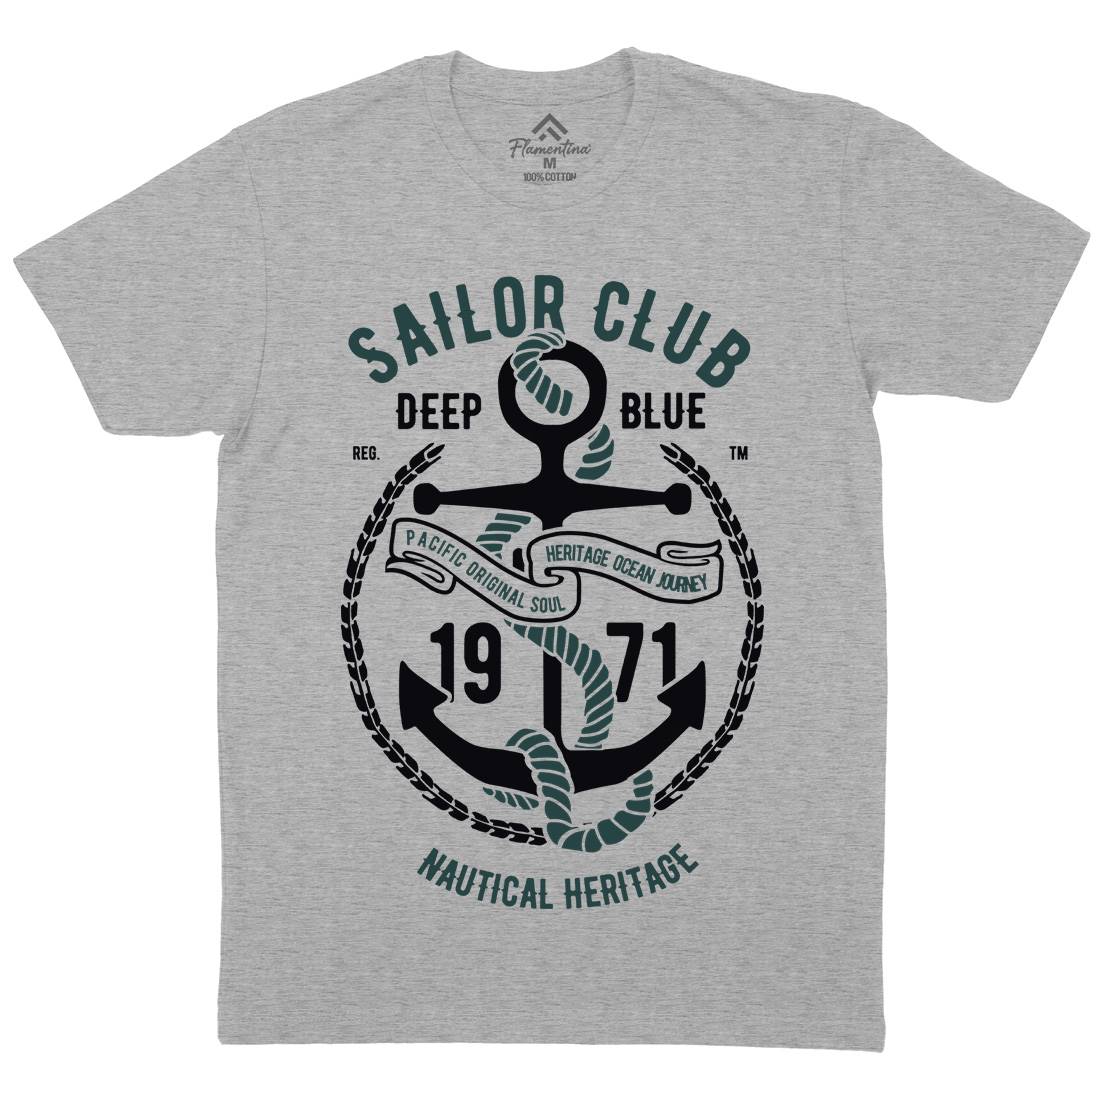 Sailor Club Mens Organic Crew Neck T-Shirt Navy B445